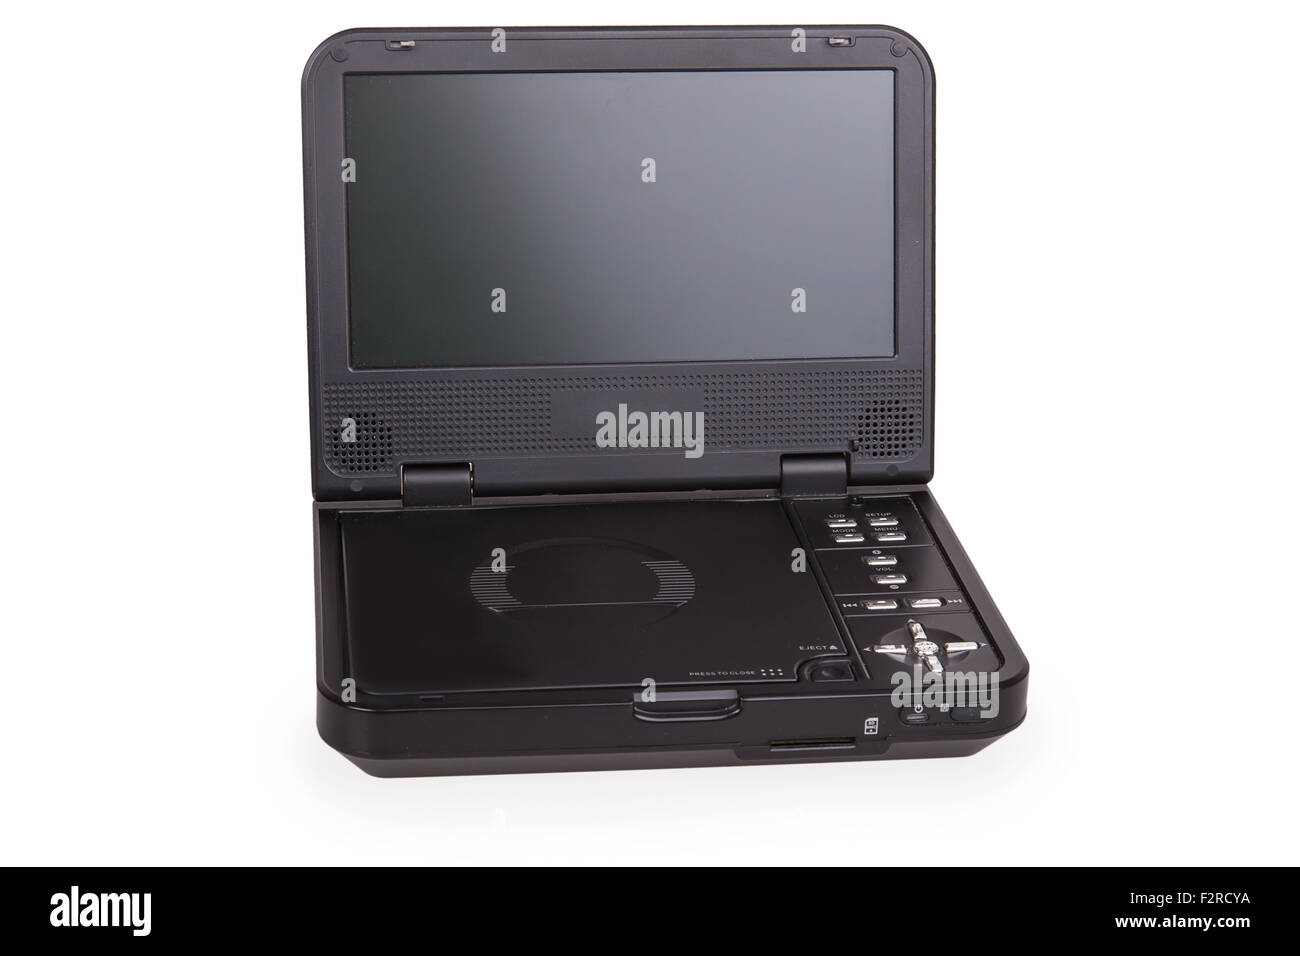 Reproductor de dvd portátil fotografías e imágenes de alta resolución -  Alamy